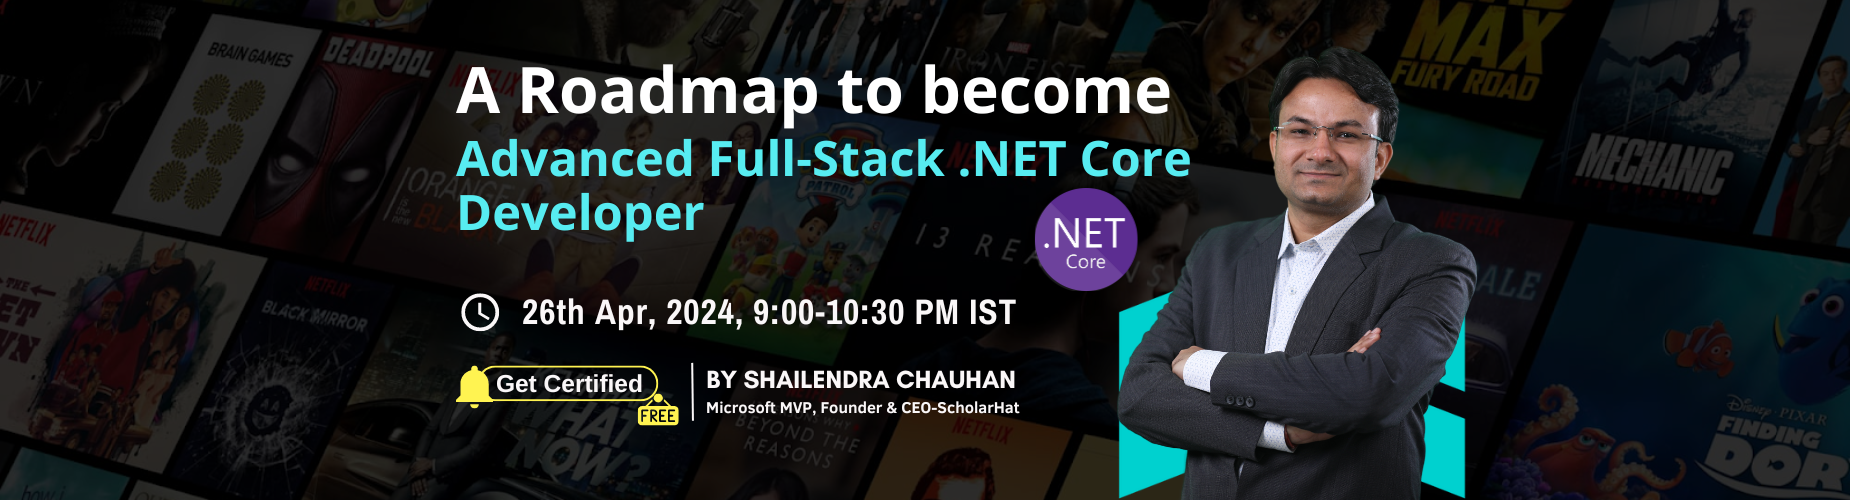 A Roadmap to Become Advanced Full-Stack .NET Core Developer